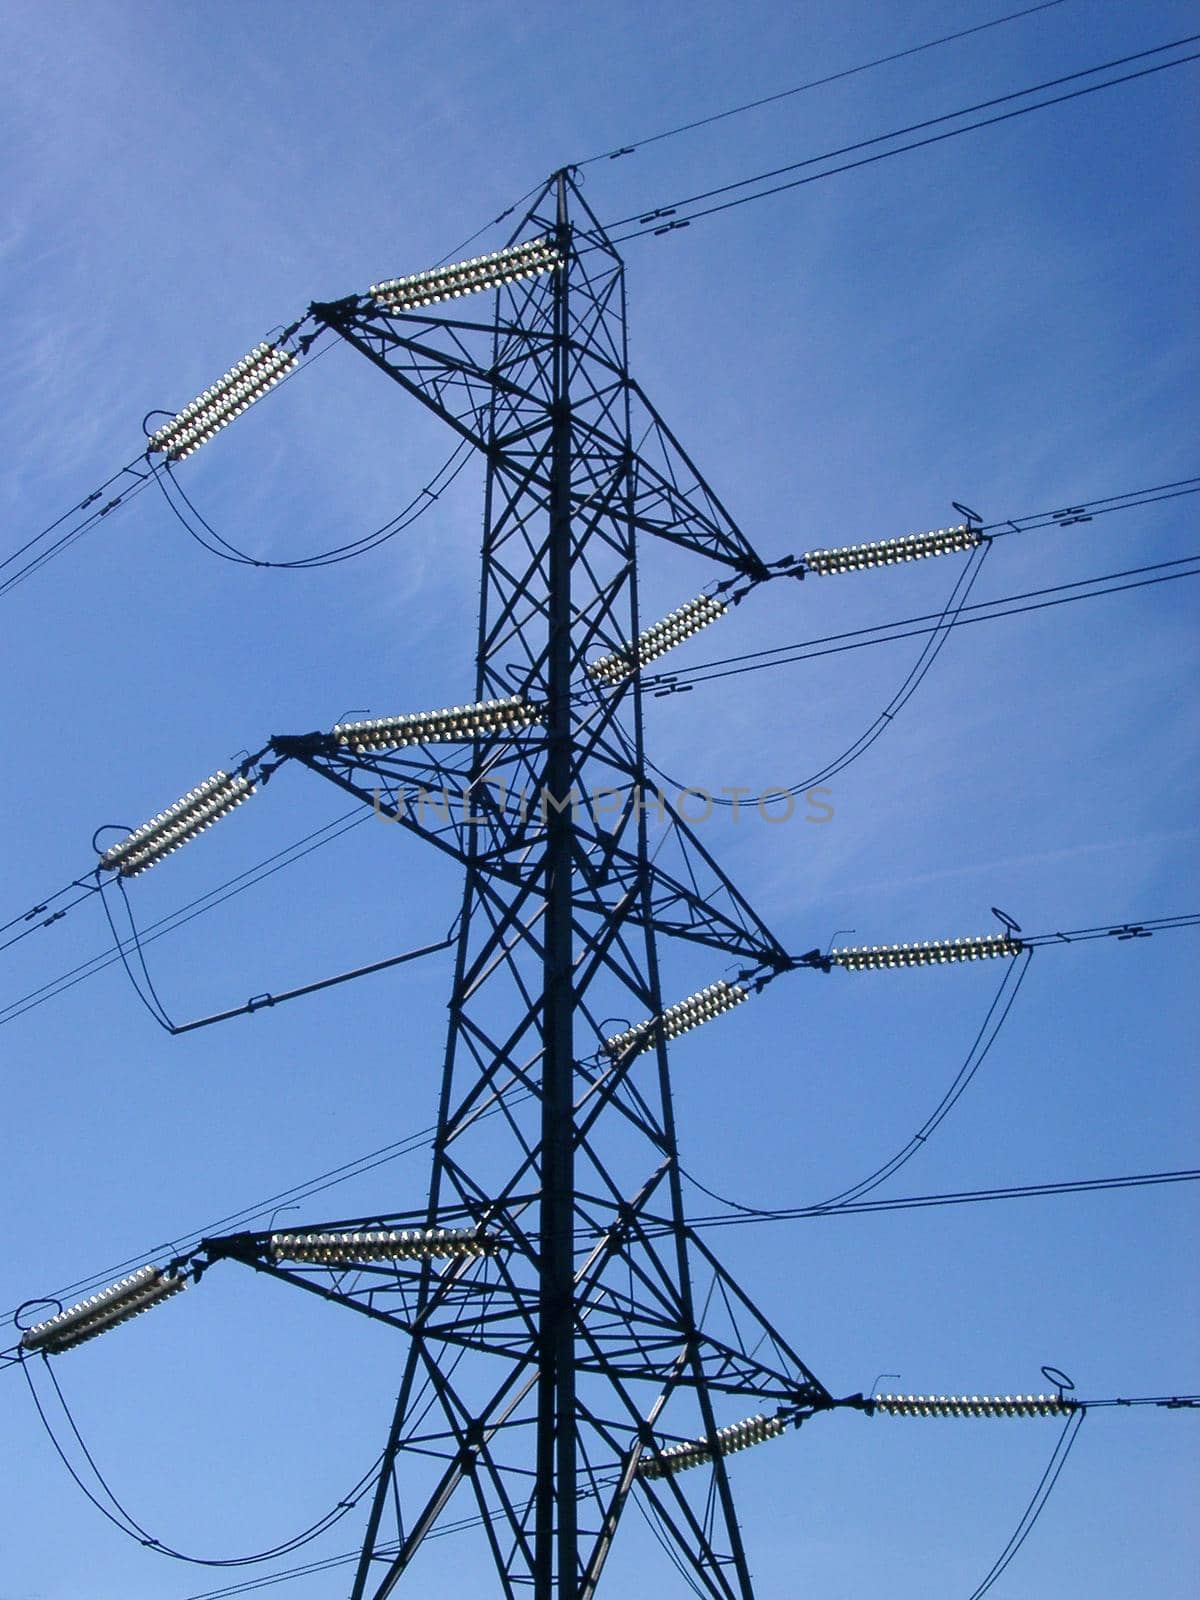 Electricity pylon against blue sky by sanisra